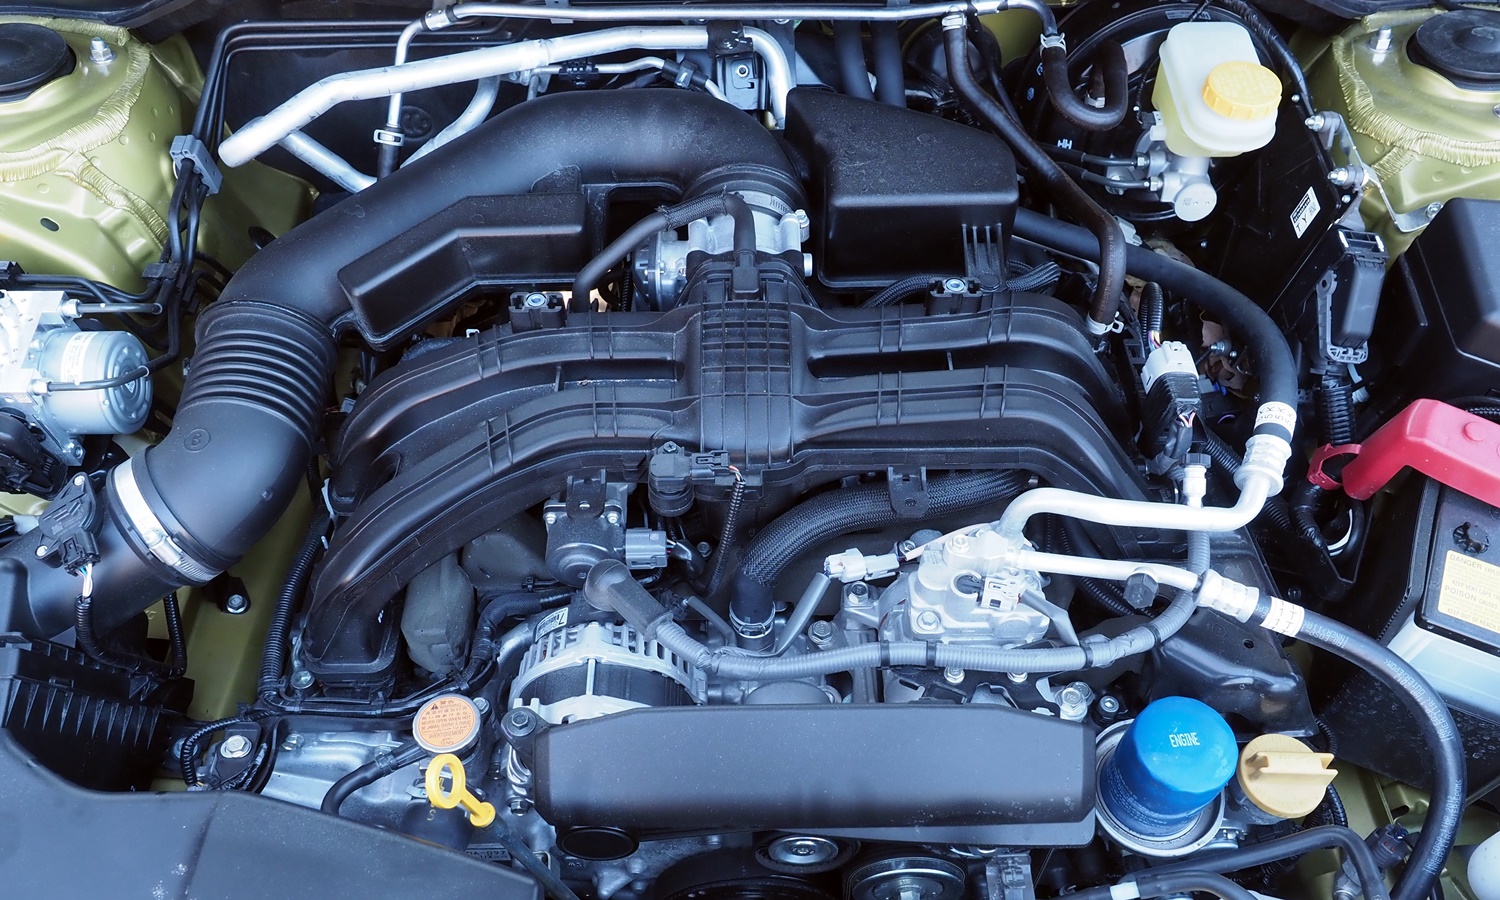 Crosstrek Reviews: Subaru Crosstrek engine